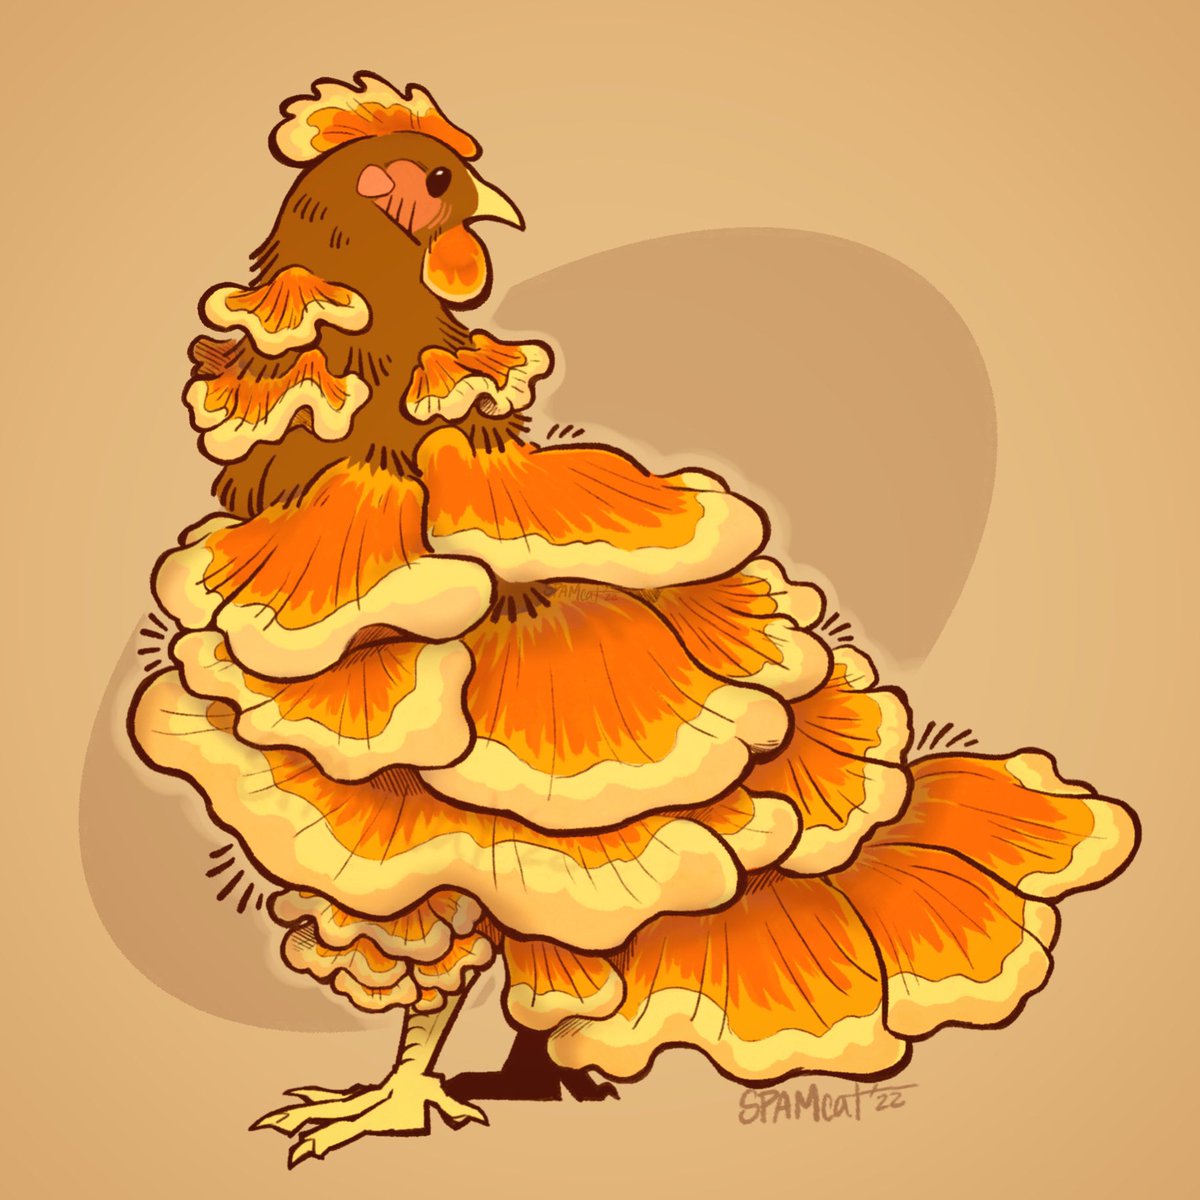 Chimkim of da wuds 🌲🐓🌲

#chicken #mushroom #chickenofthewoods #doodle #doodleart